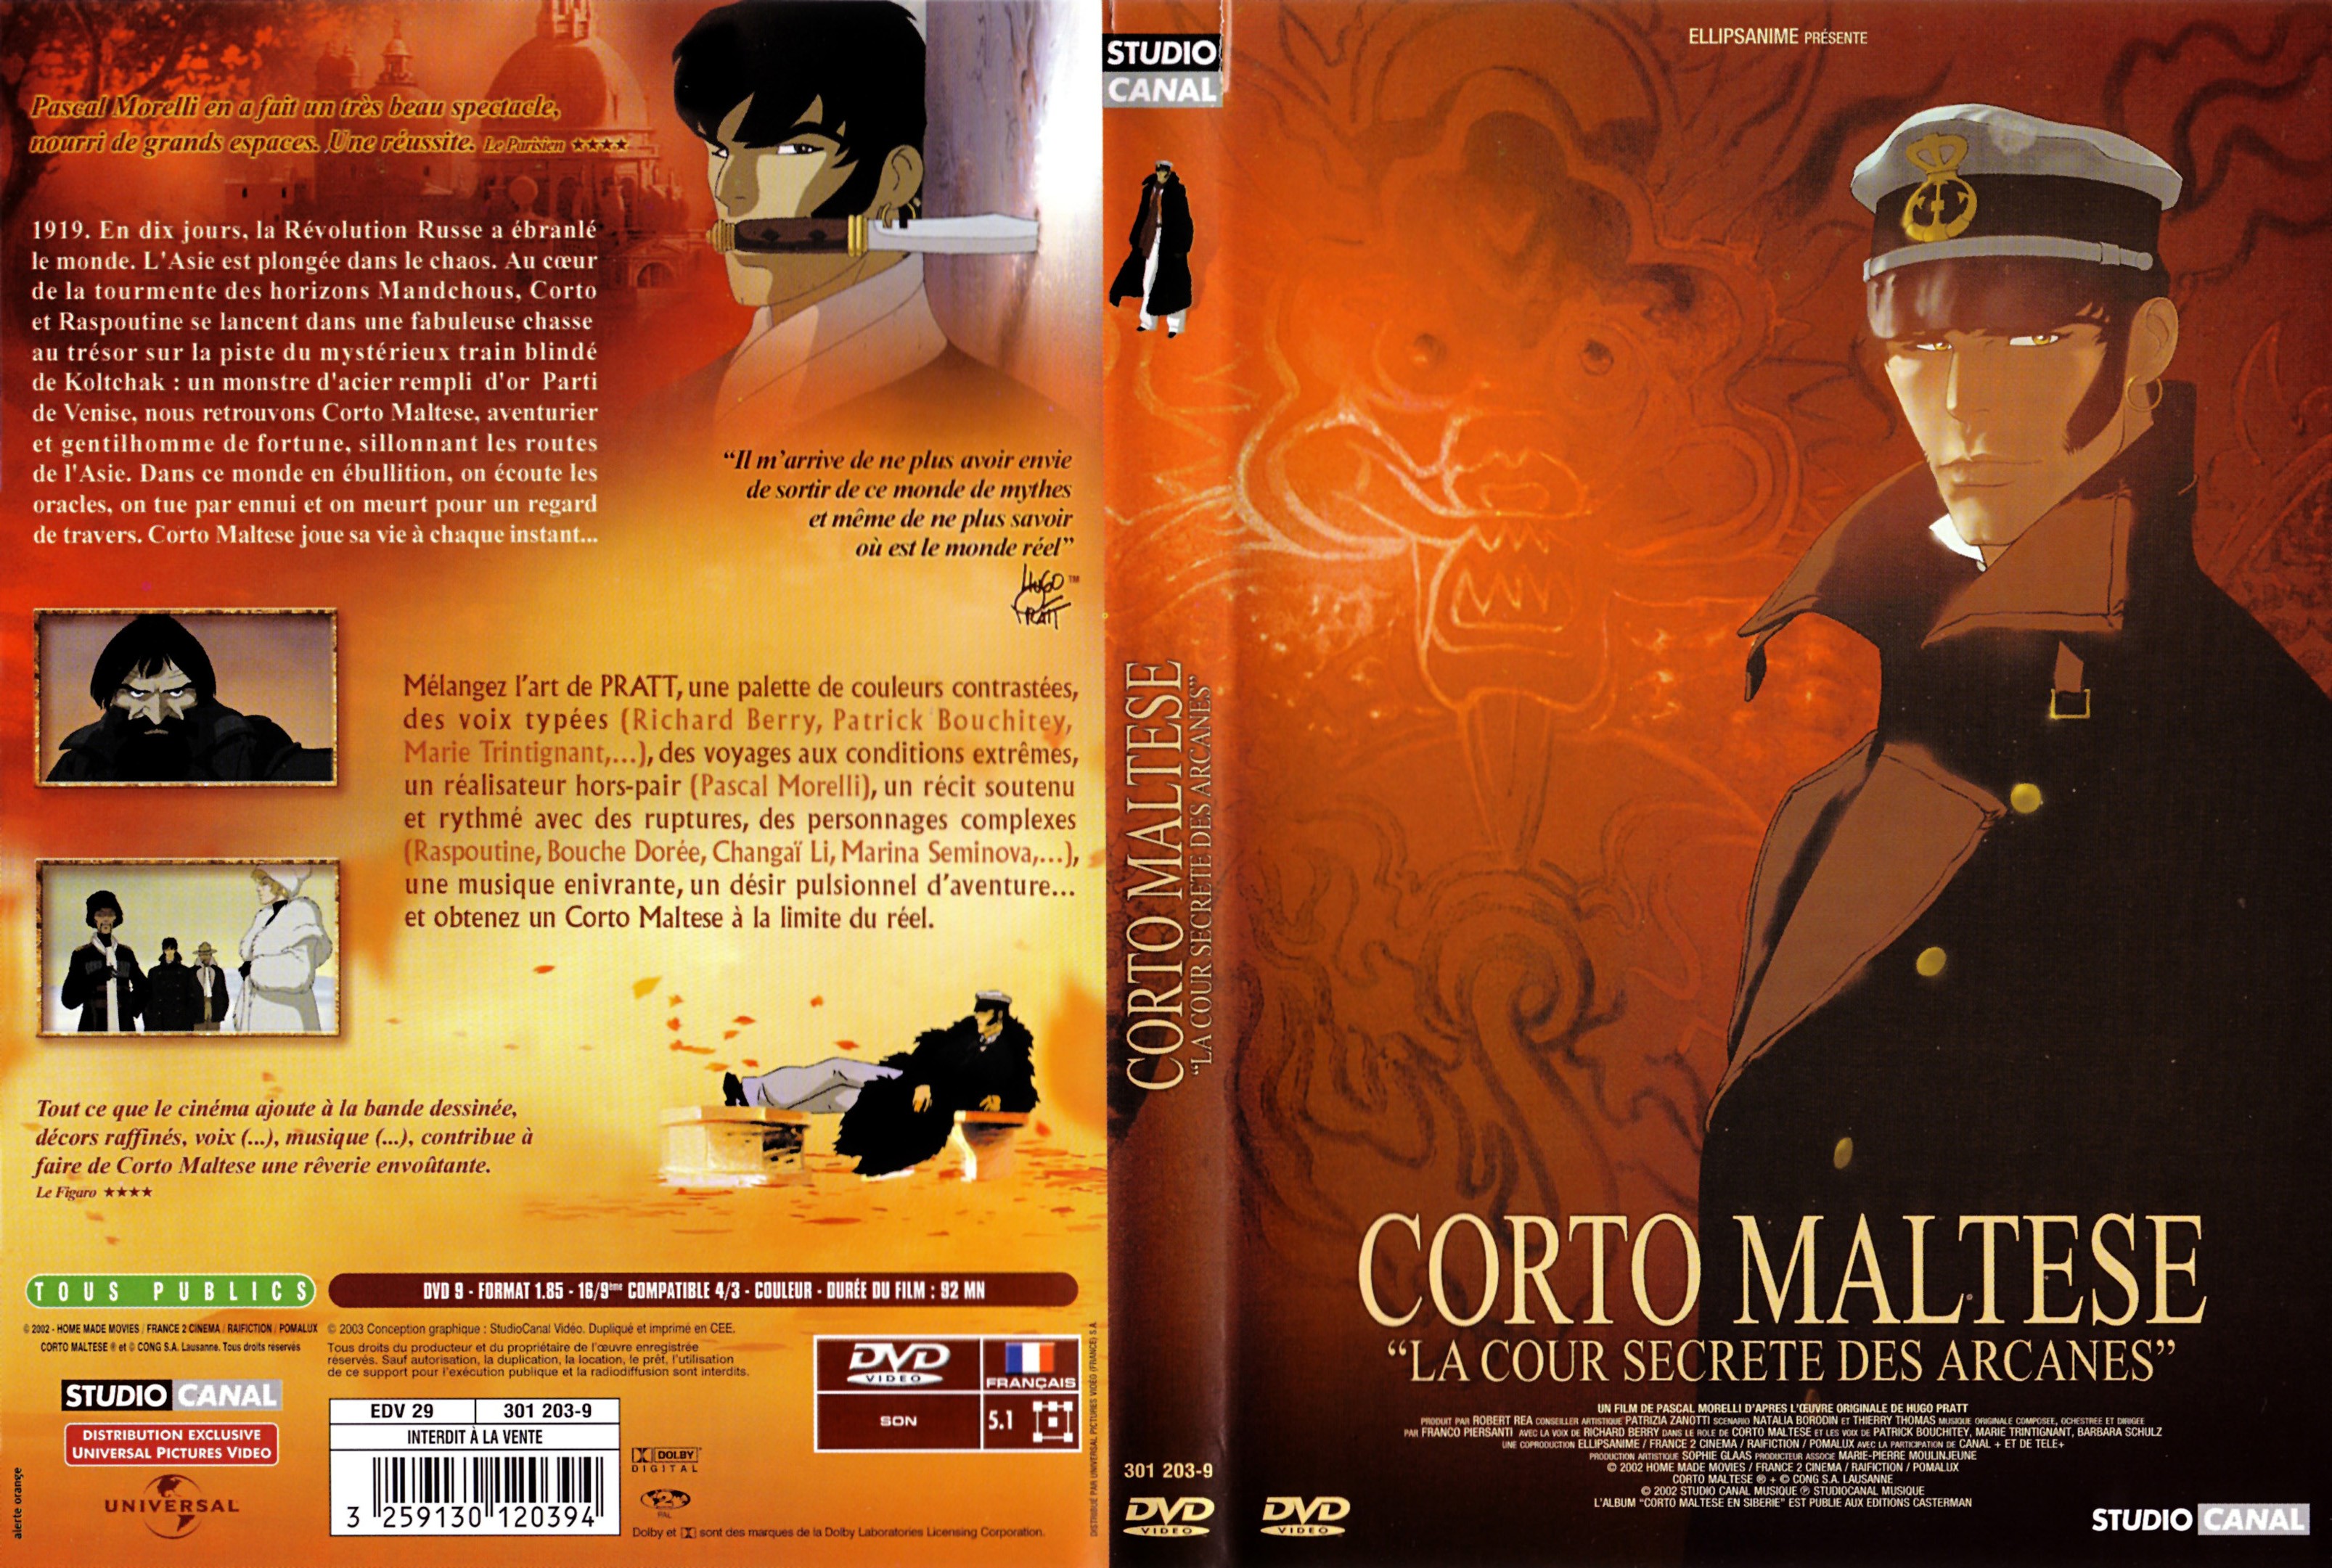 Jaquette DVD Corto Maltese - la cour secrete des arcanes